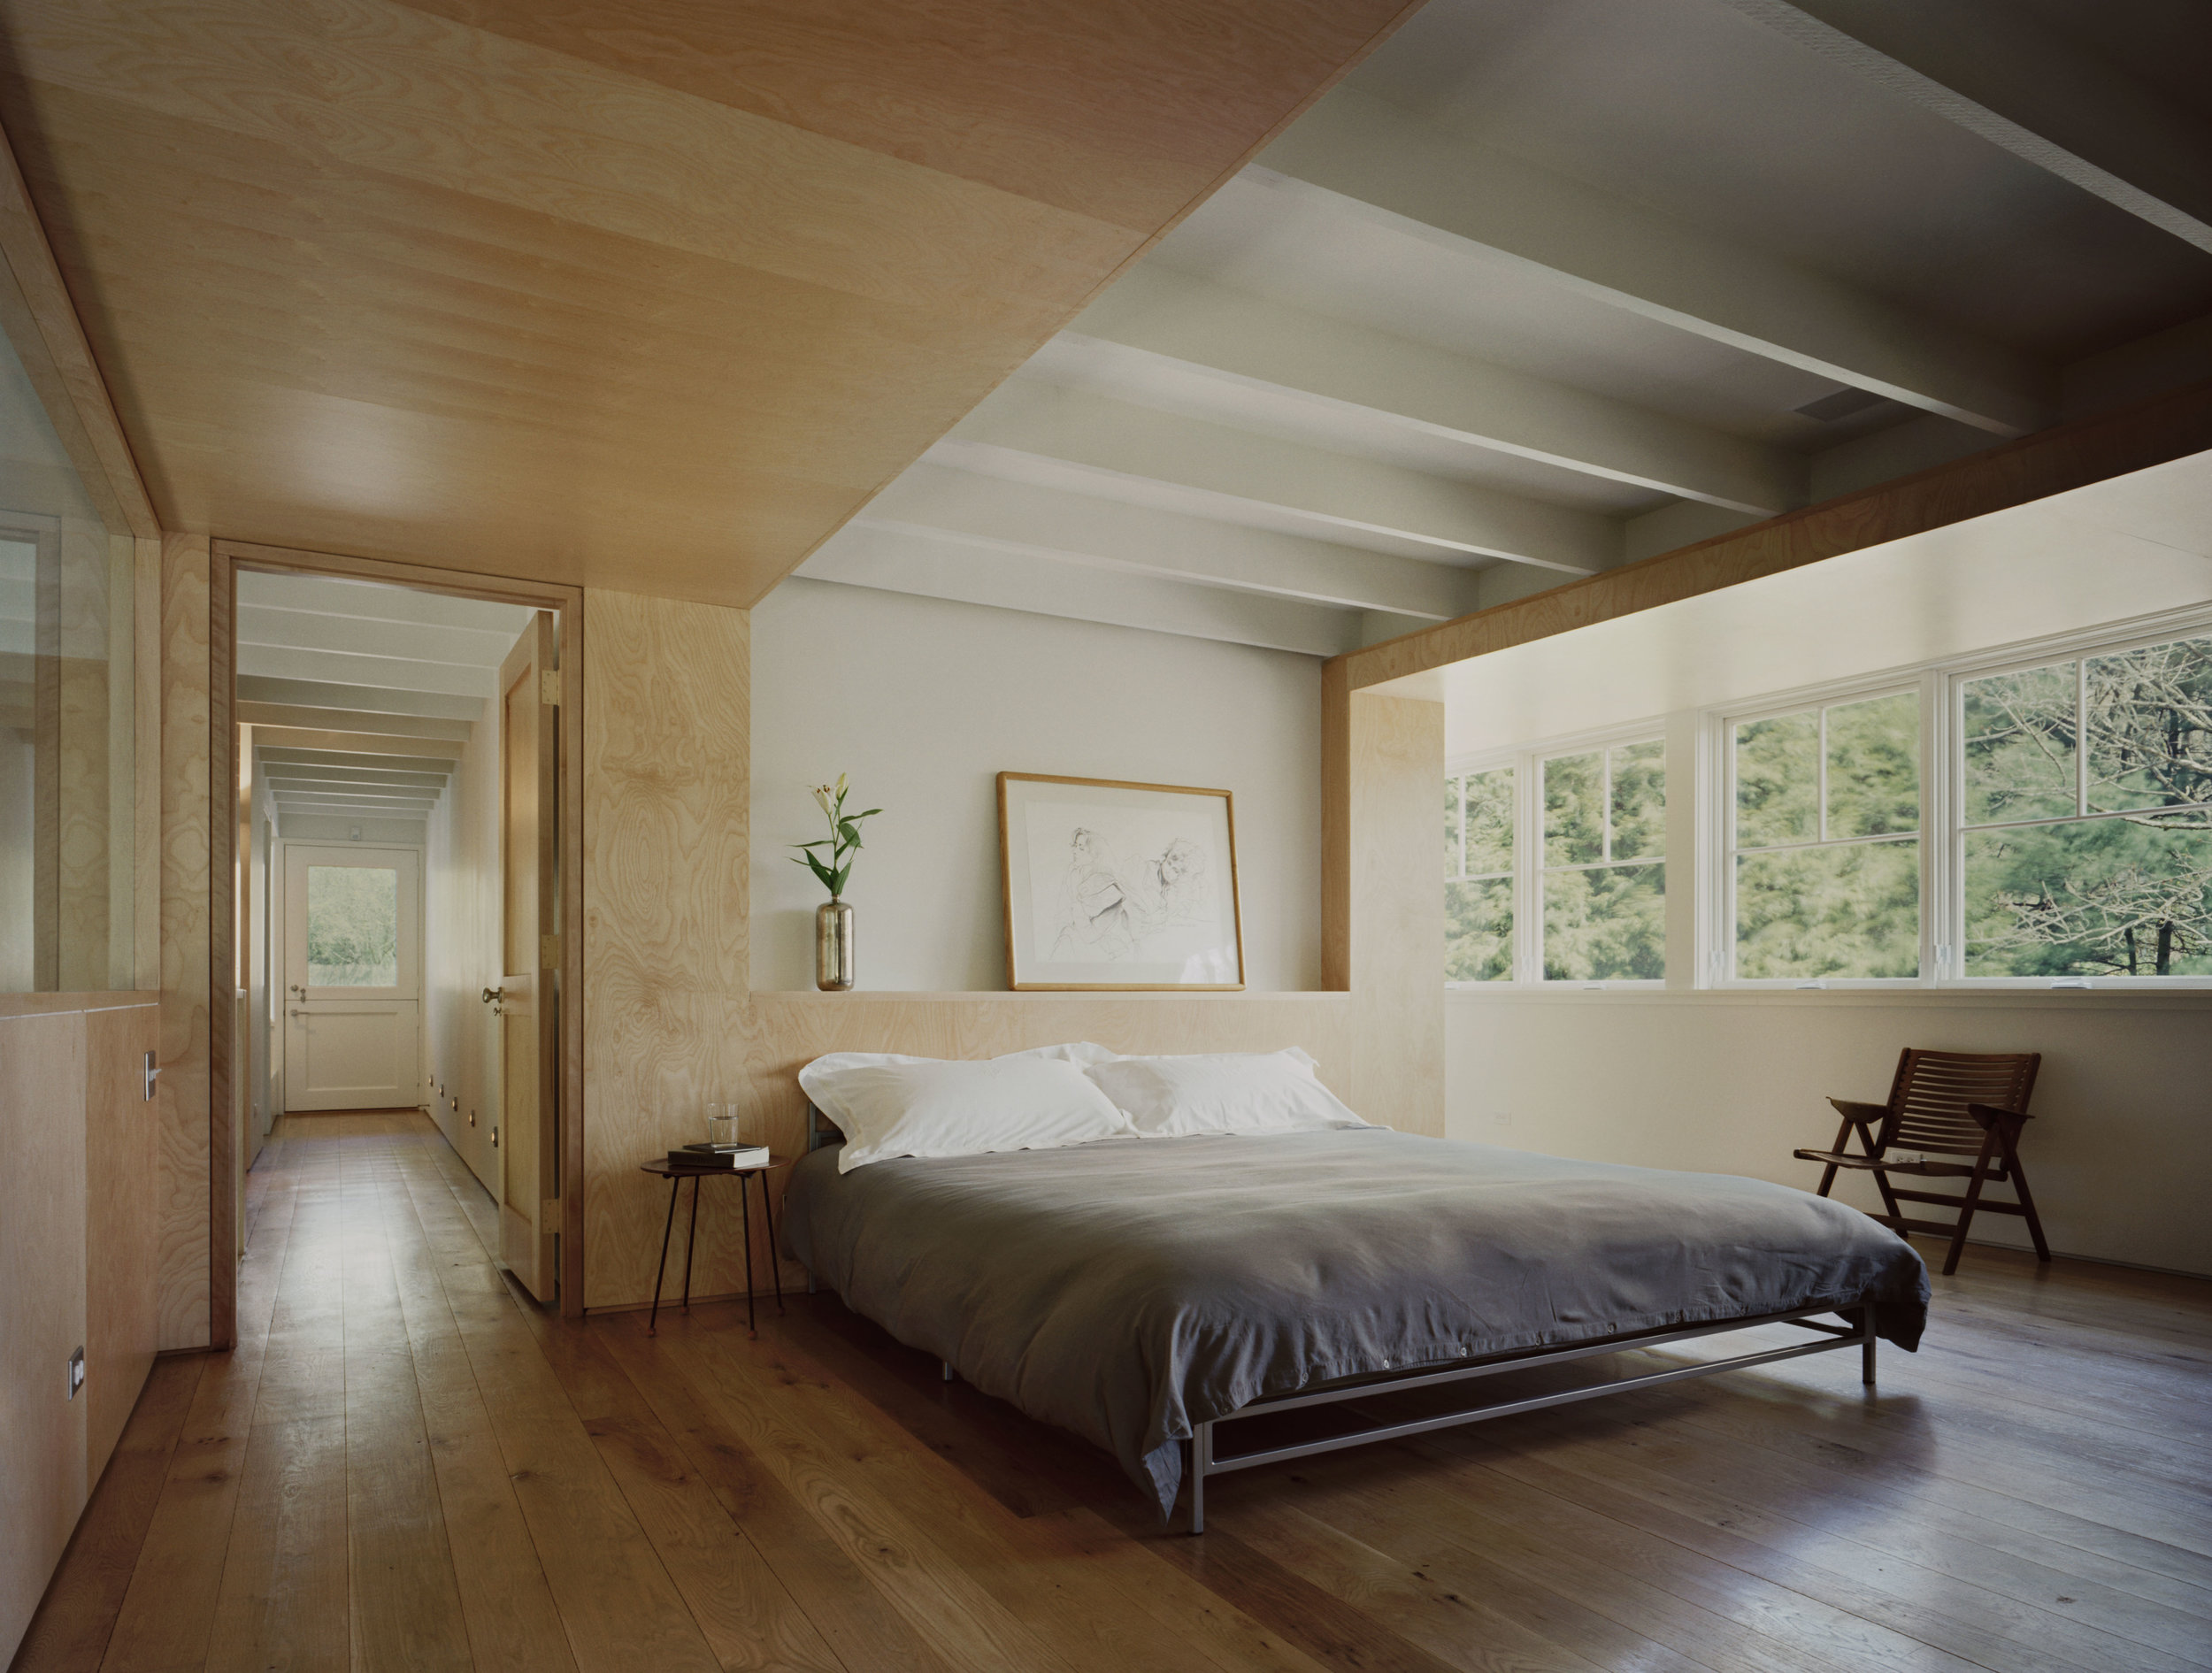 relaxing custom luxury bedroom large open windows space